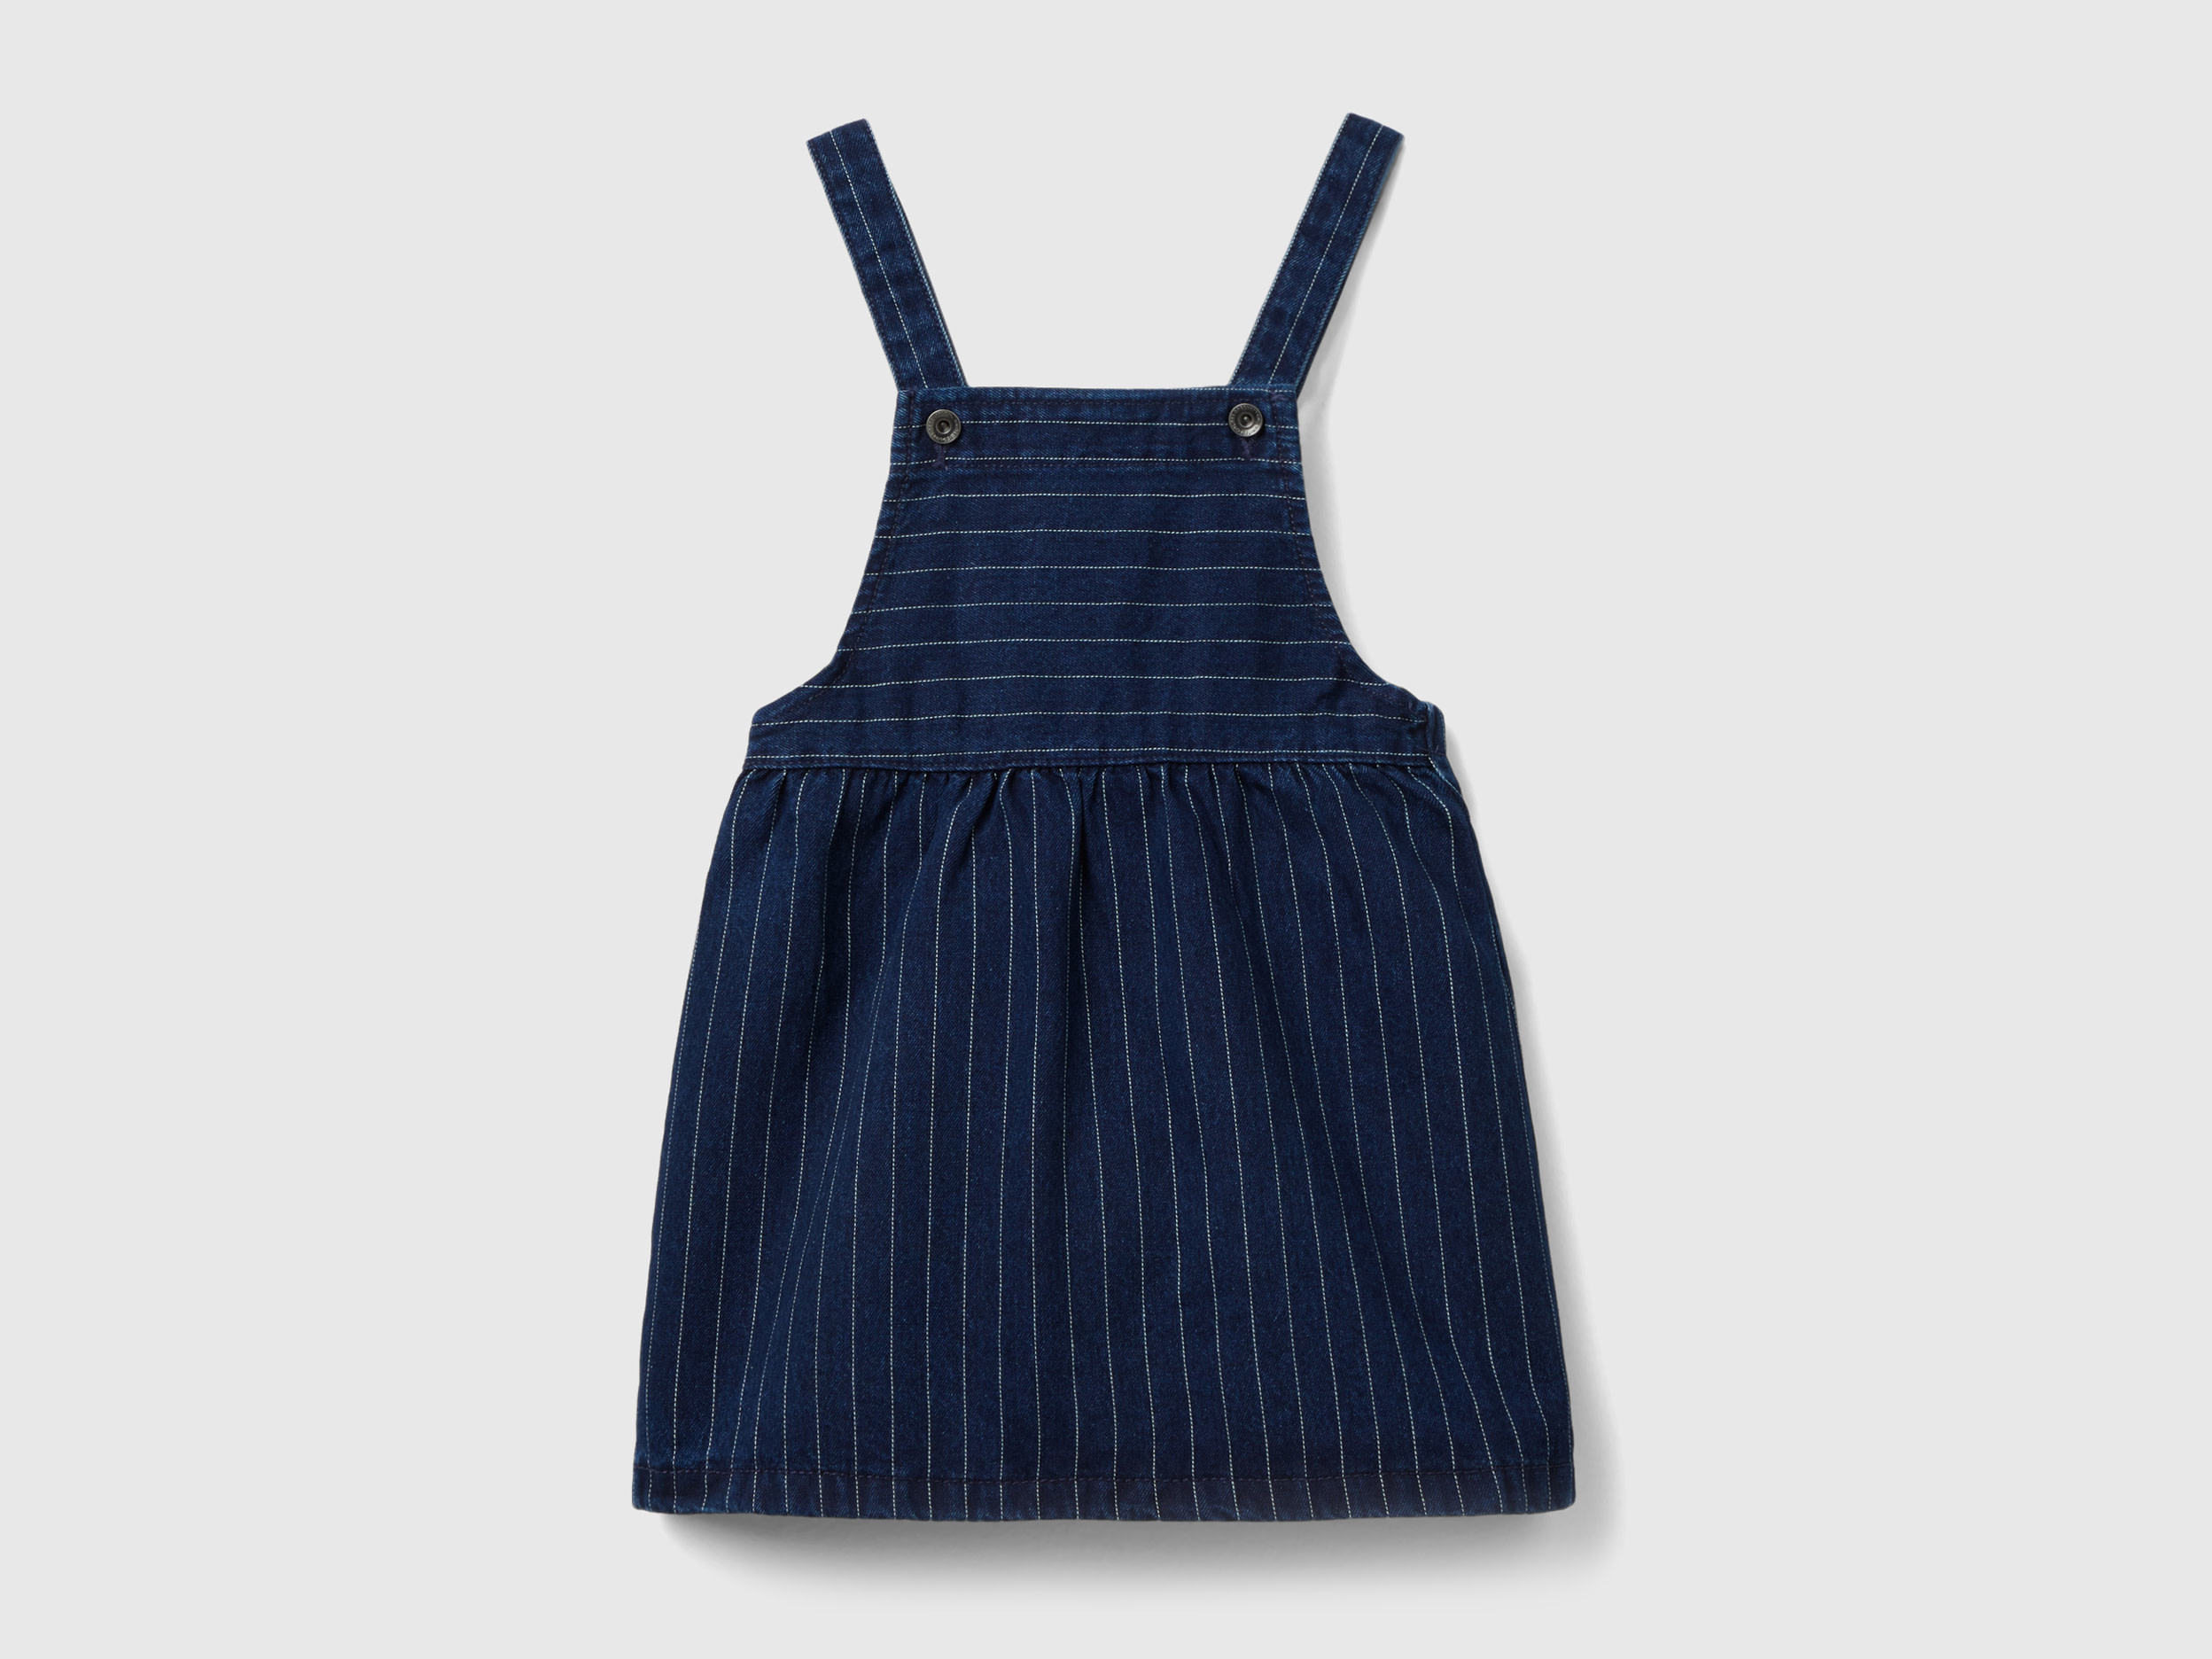 Benetton, Denim Overall Skirt With Pinstripes, size 5-6, Dark Blue, Kids